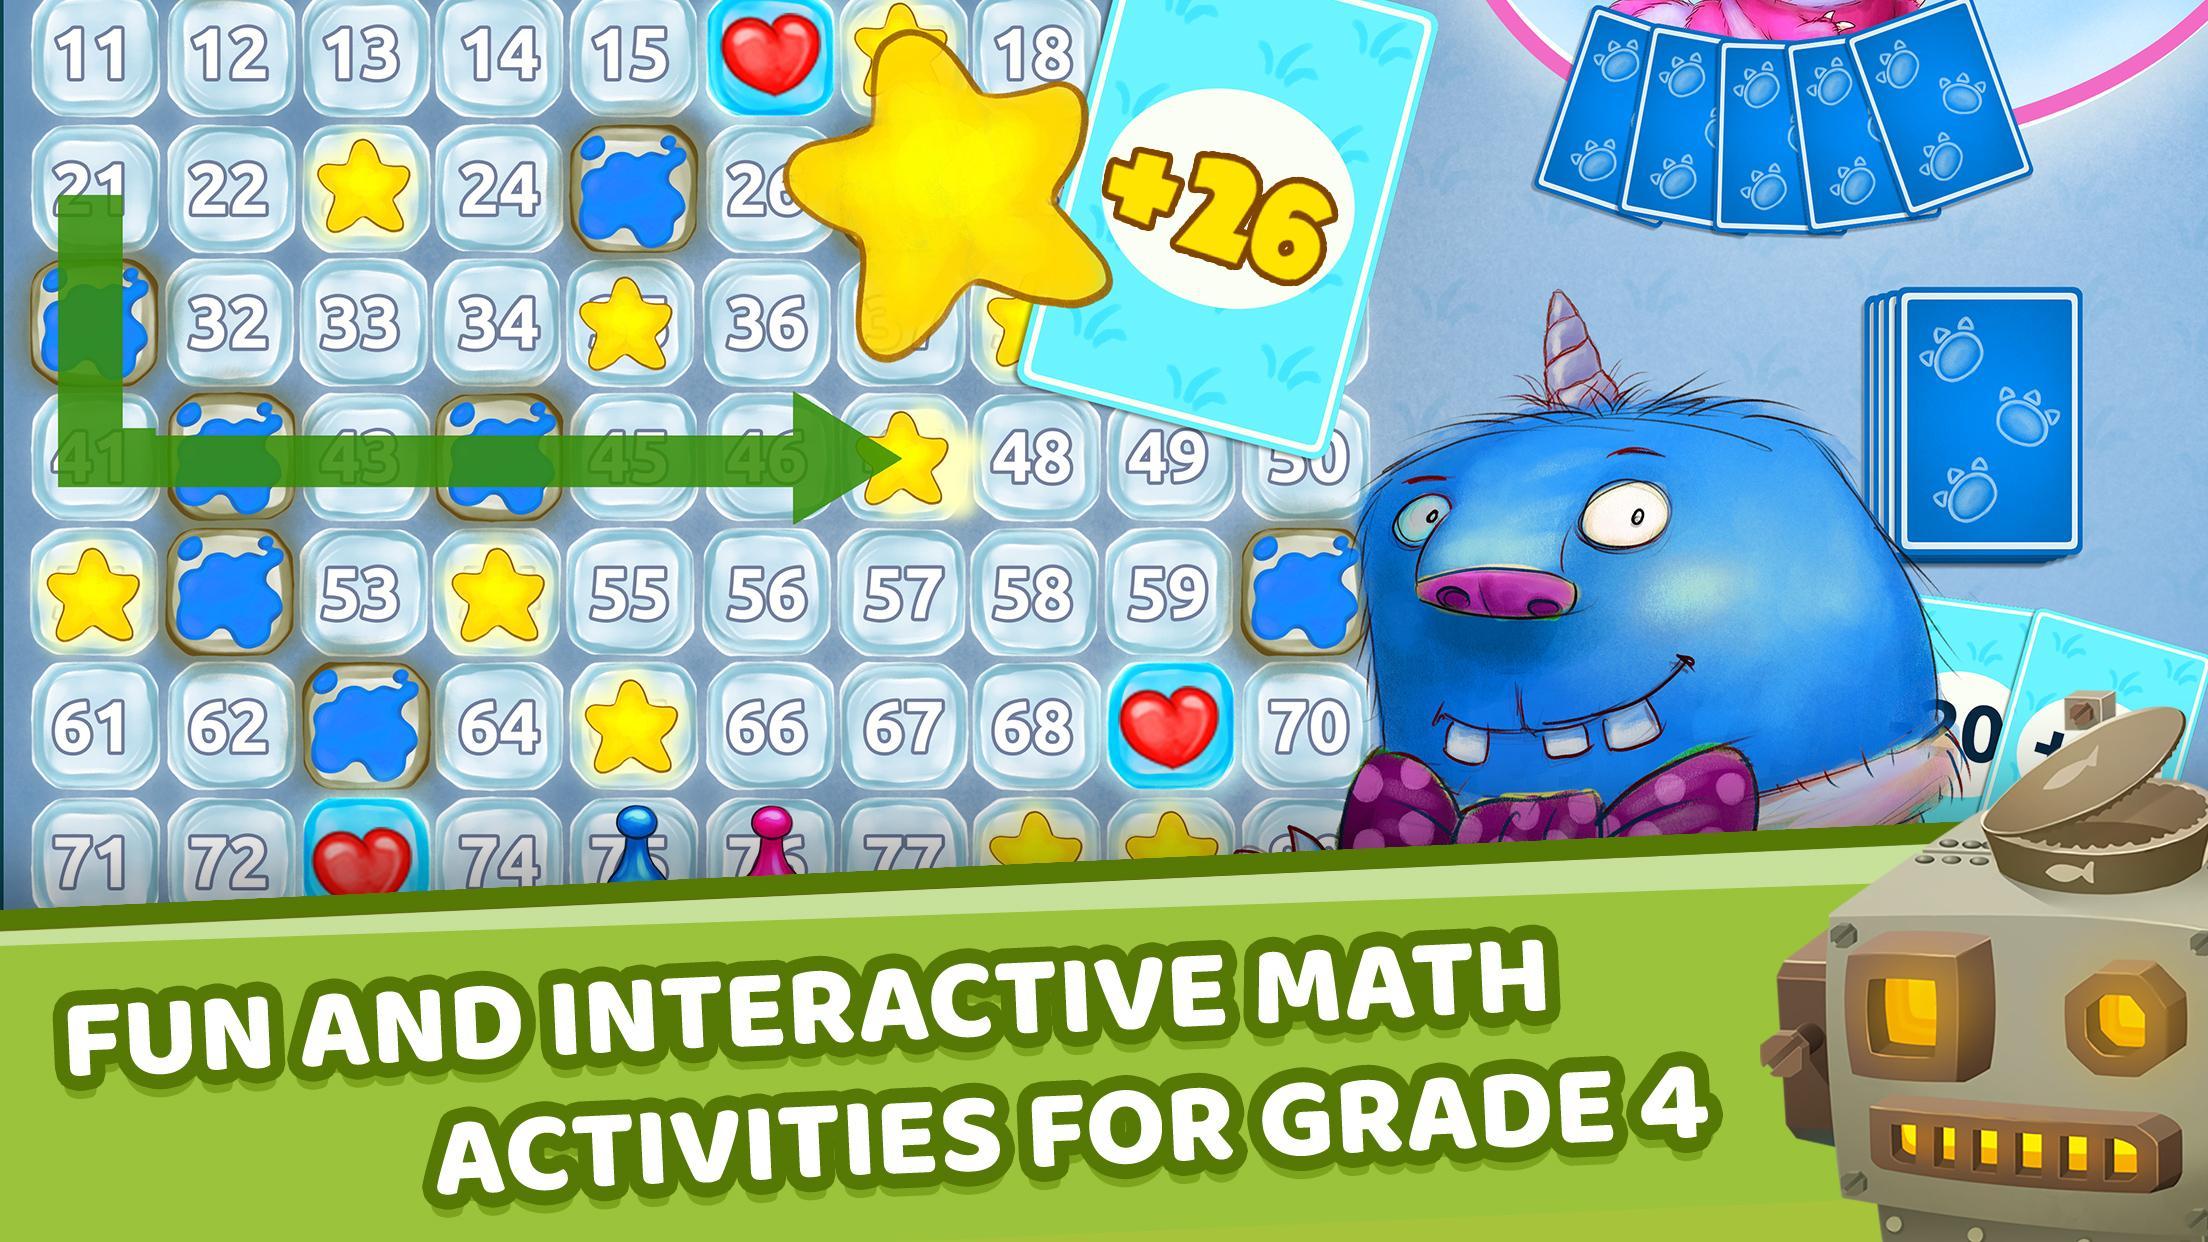 Matific Galaxy - Maths Games for 4th Graders 2.2.2 Screenshot 3